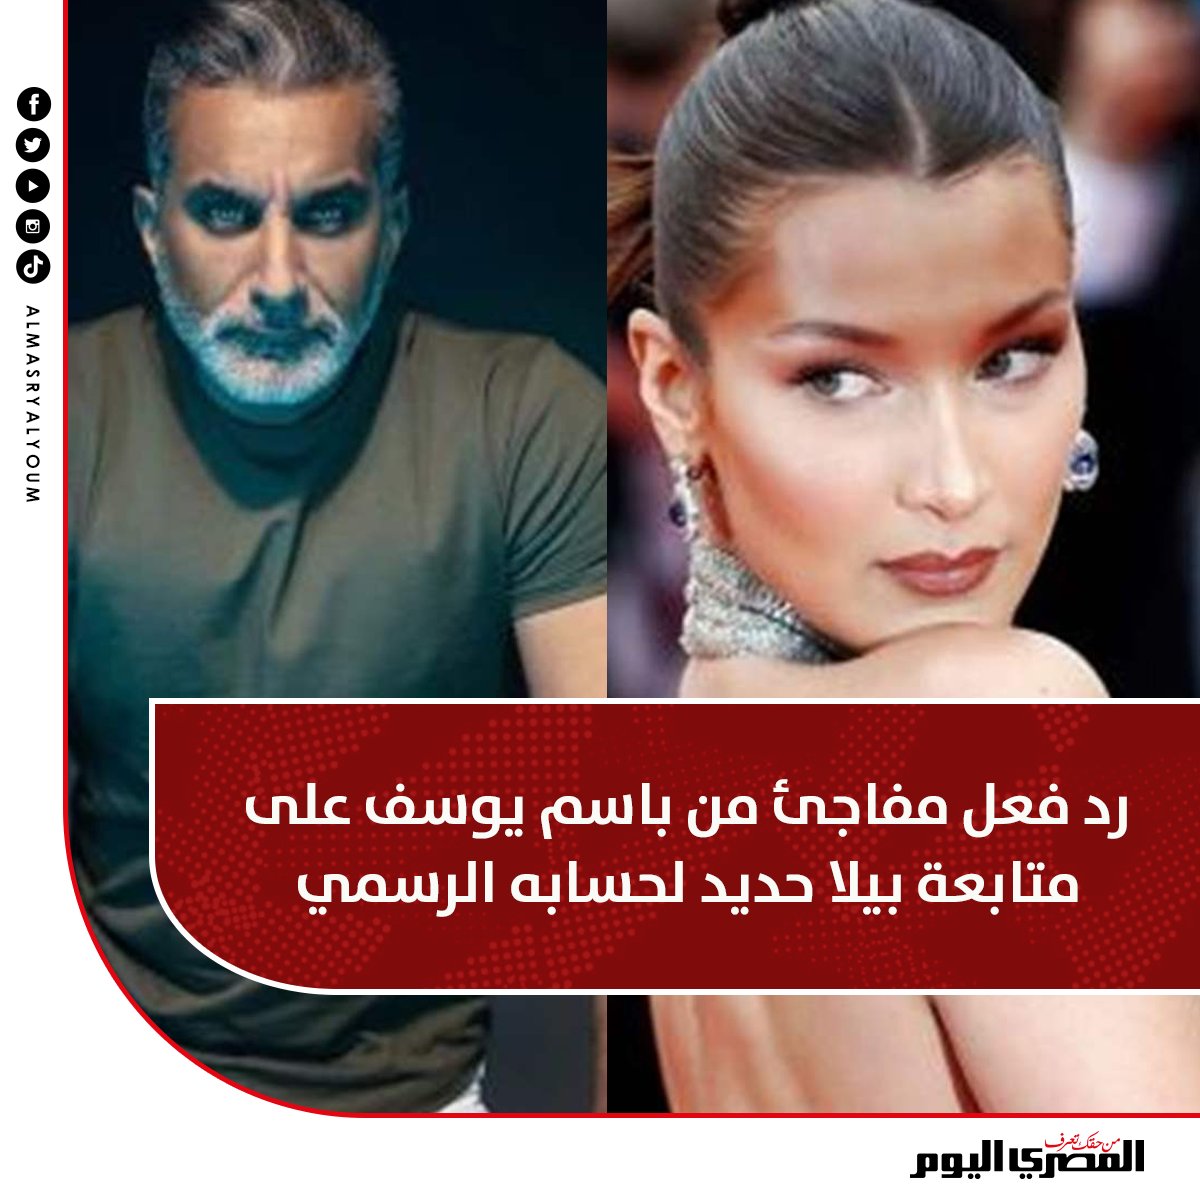 رد فعل مفاجئ من #باسم_يوسف على متابعة #بيلا_حديد لحسابه الرسمي tinyurl.com/y97nx5ae